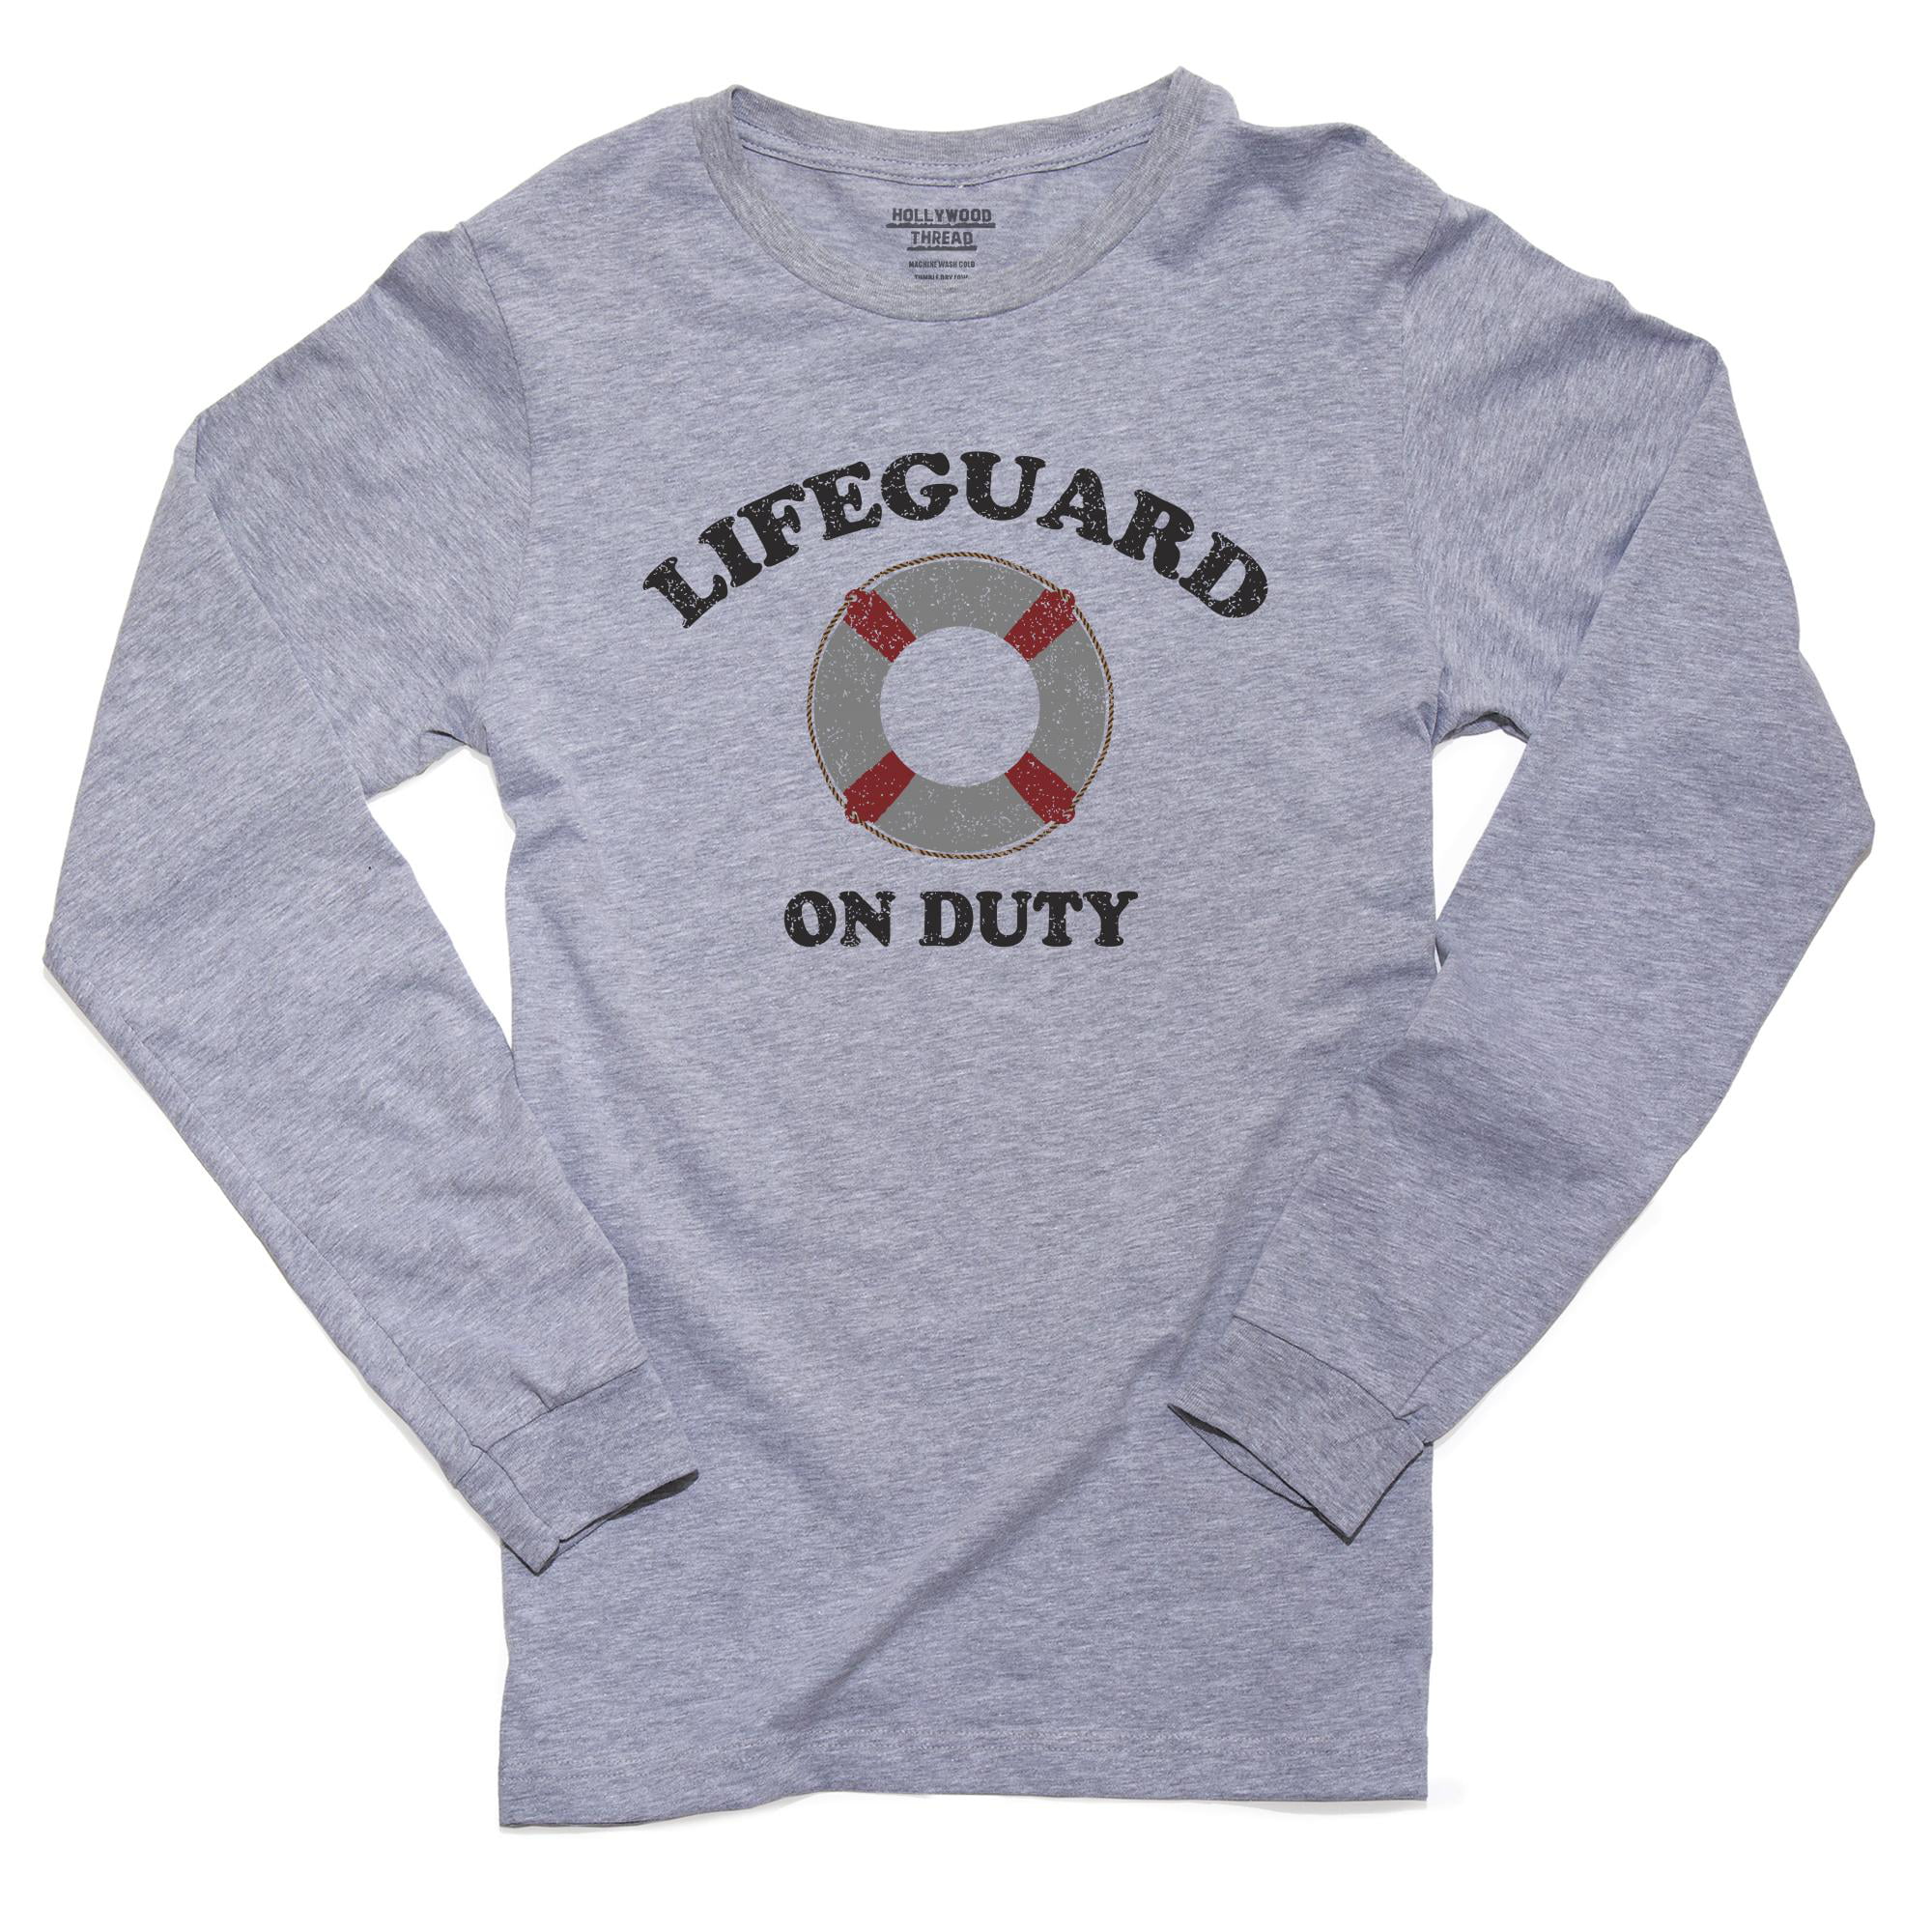 Lifeguard On Duty Men's Long Sleeve Grey T-Shirt - Walmart.com